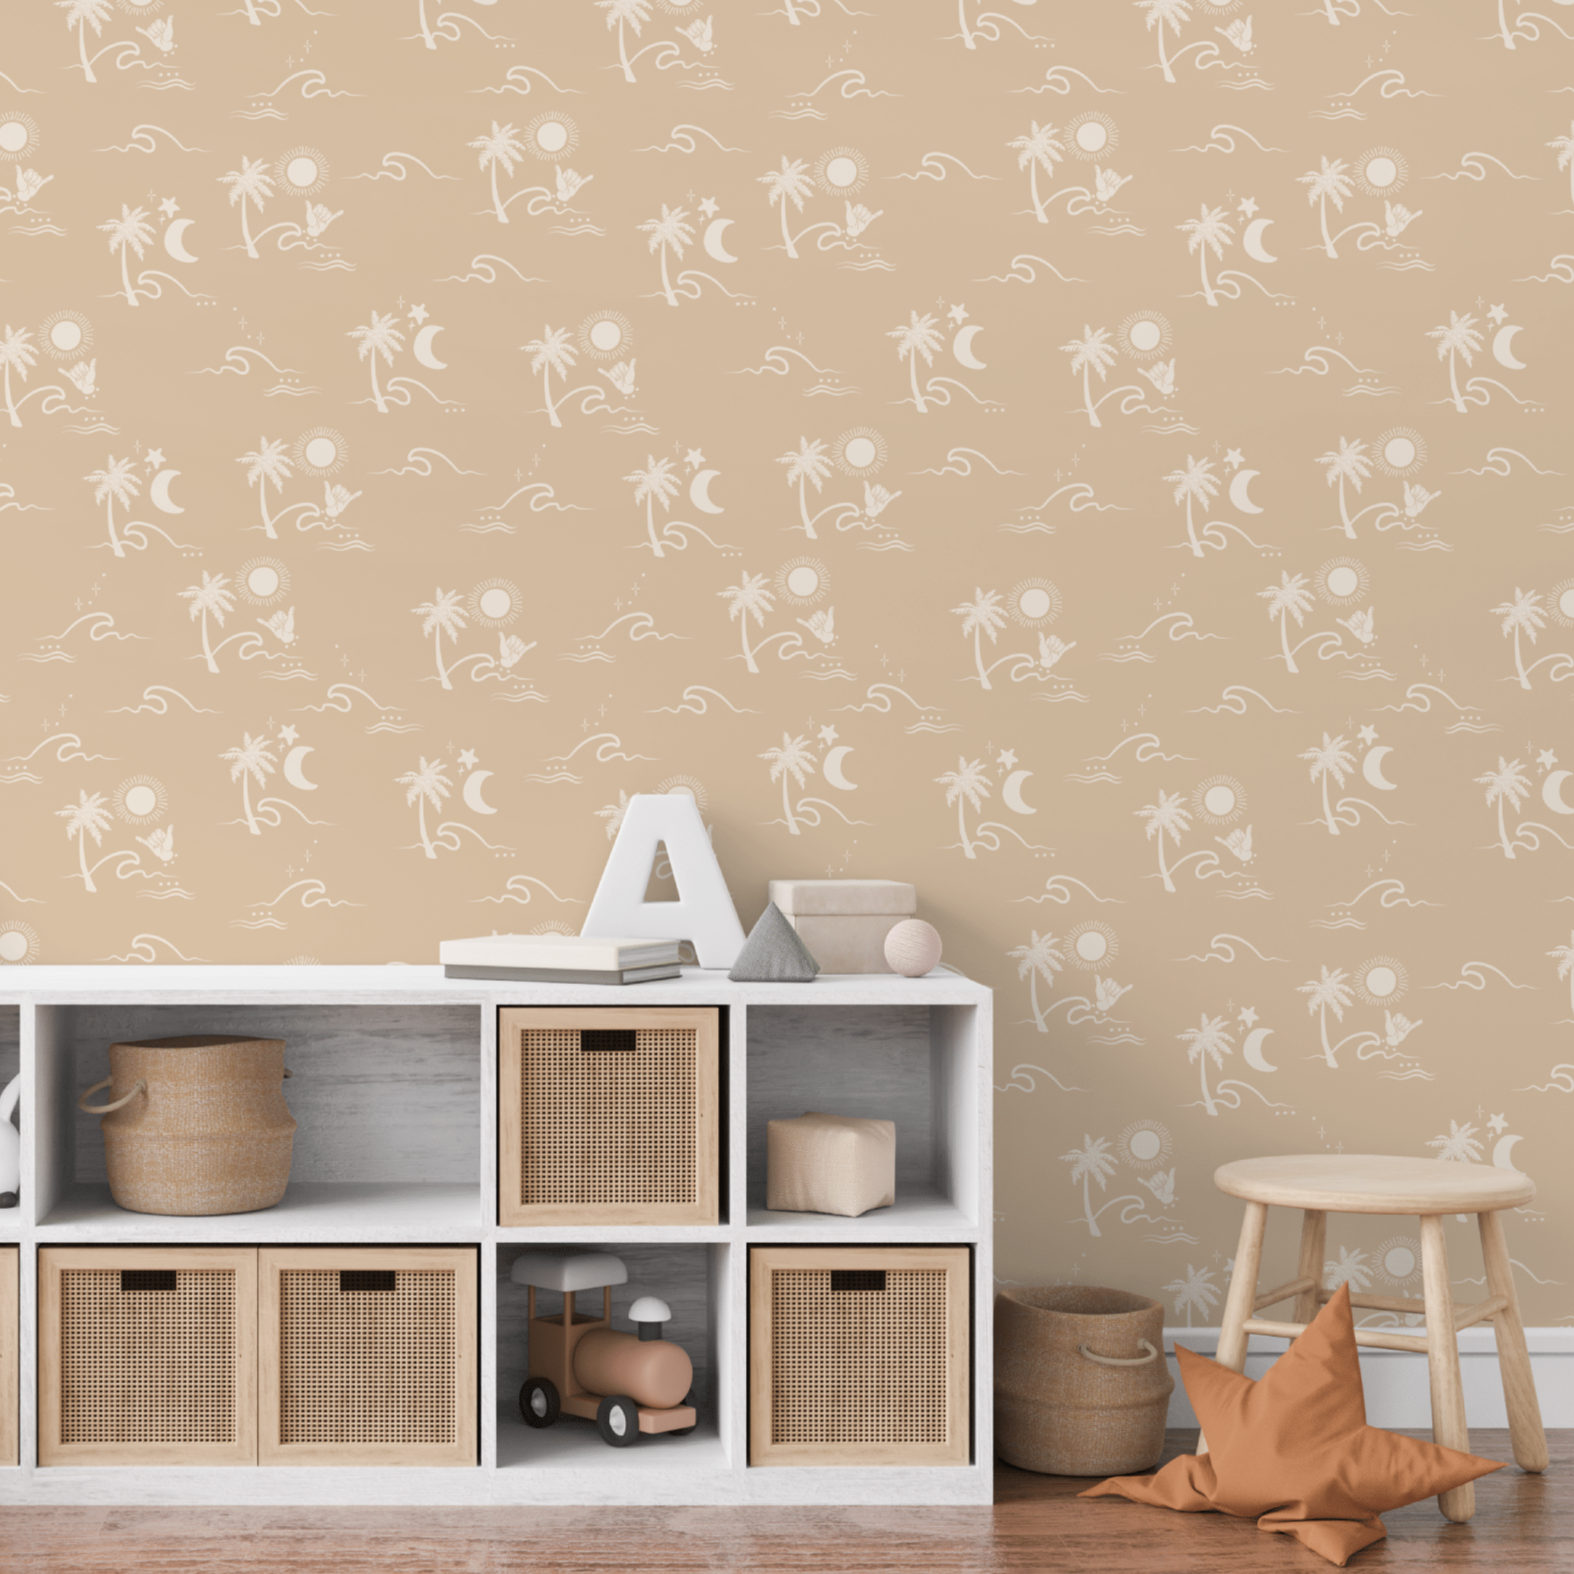 Free boho desktop wallpaper templates to personalize | Canva